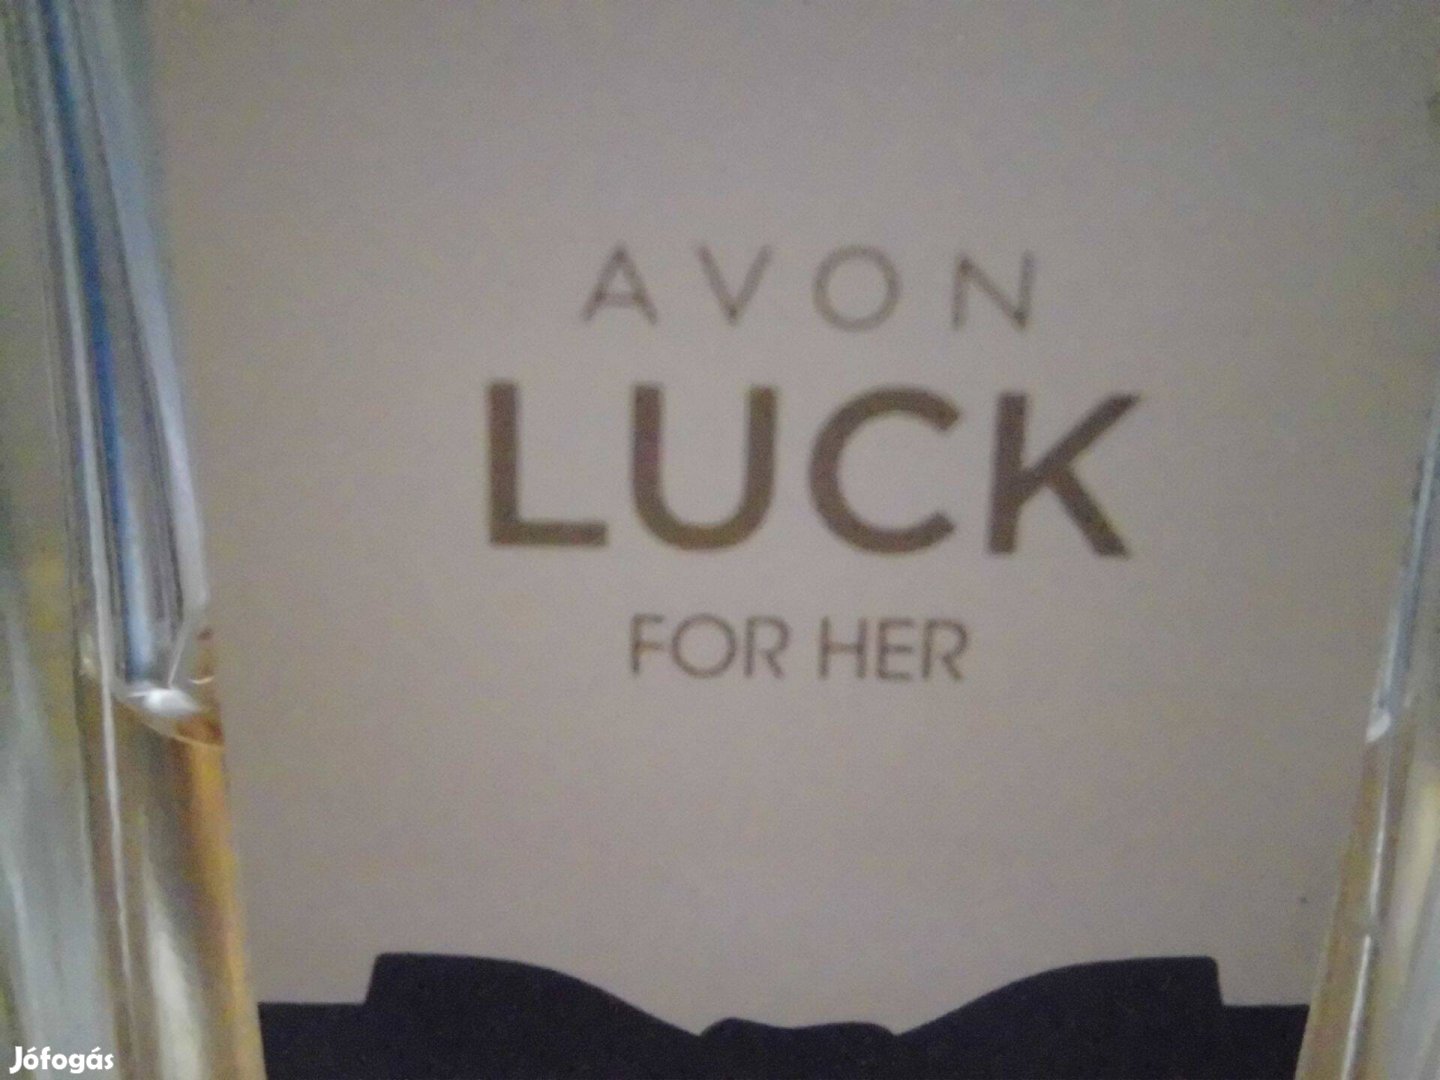 Avon Luck for Her - parfüm (spray) olcsón eladó! Kb. 50 ml